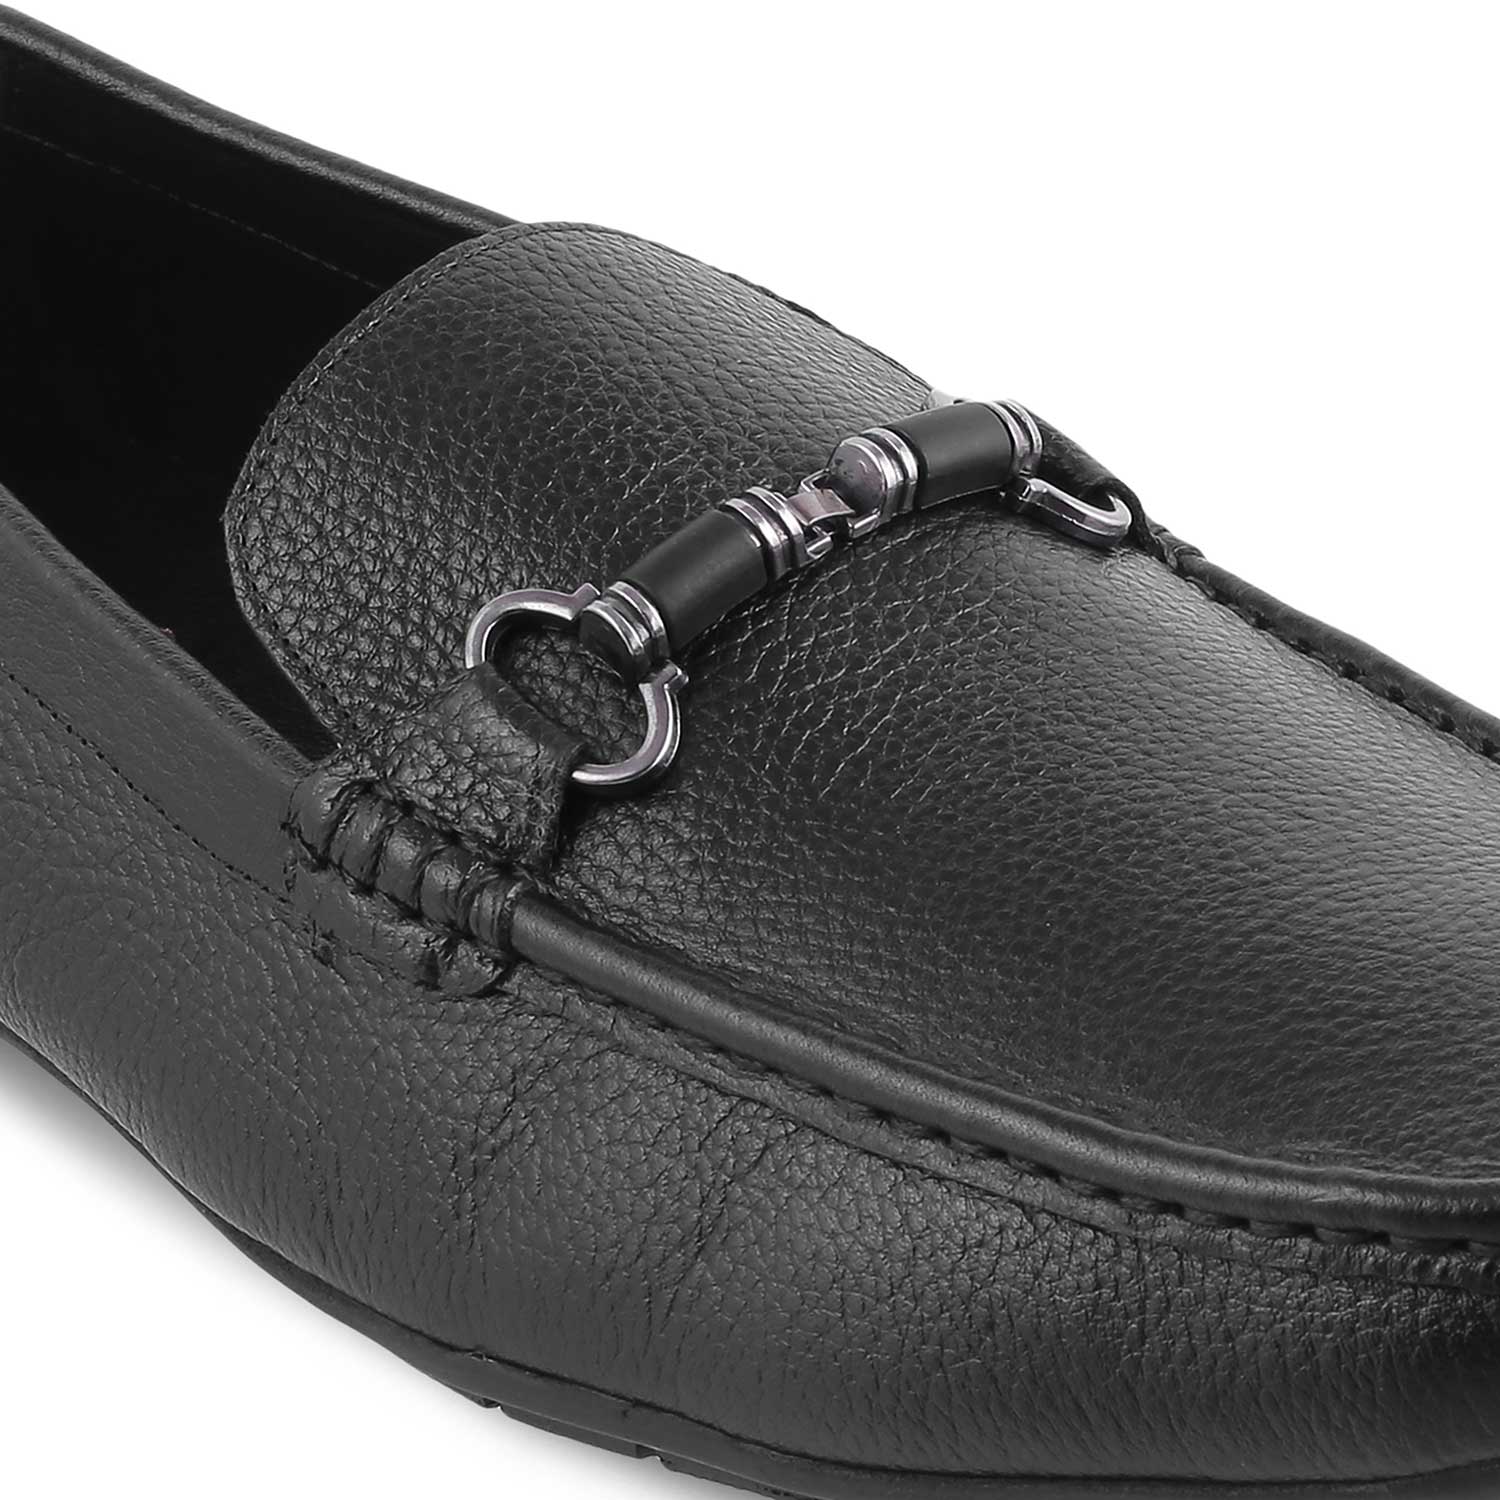 The Robuk Black Men's Leather Driving Loafers Tresmode - Tresmode